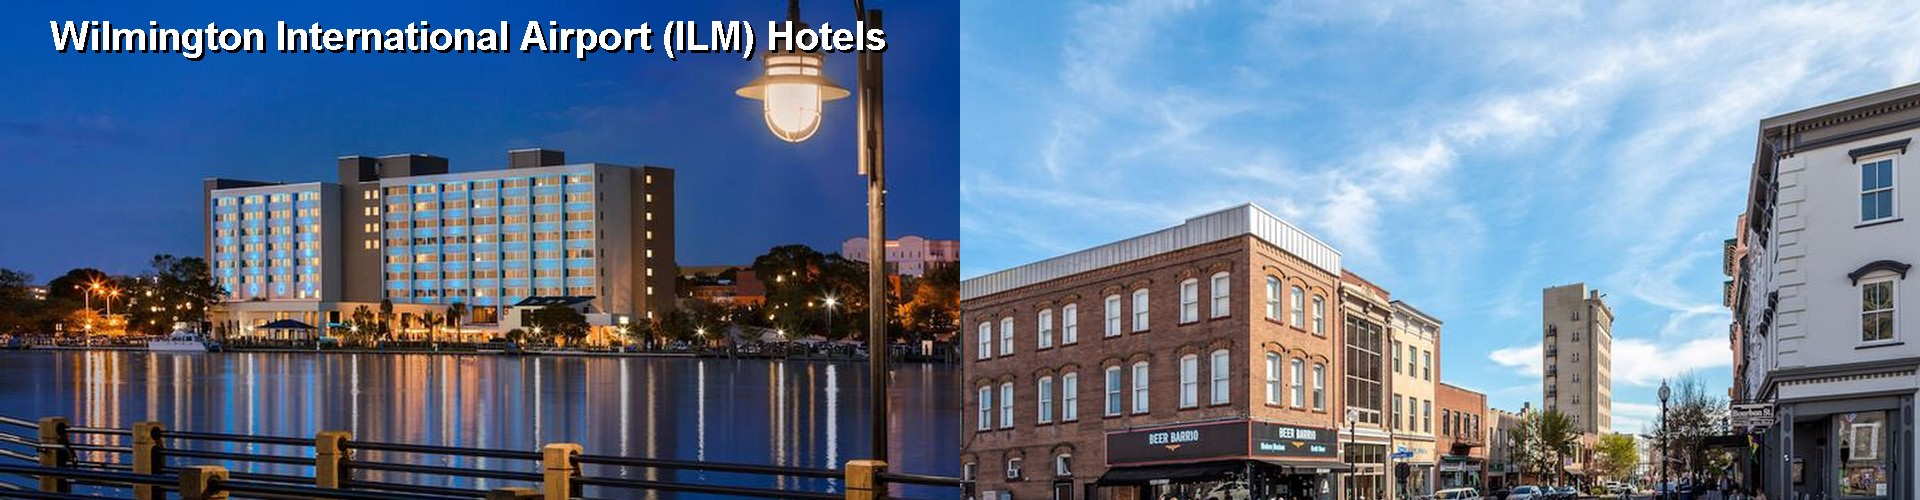 3 Best Hotels near Wilmington International Airport (ILM)